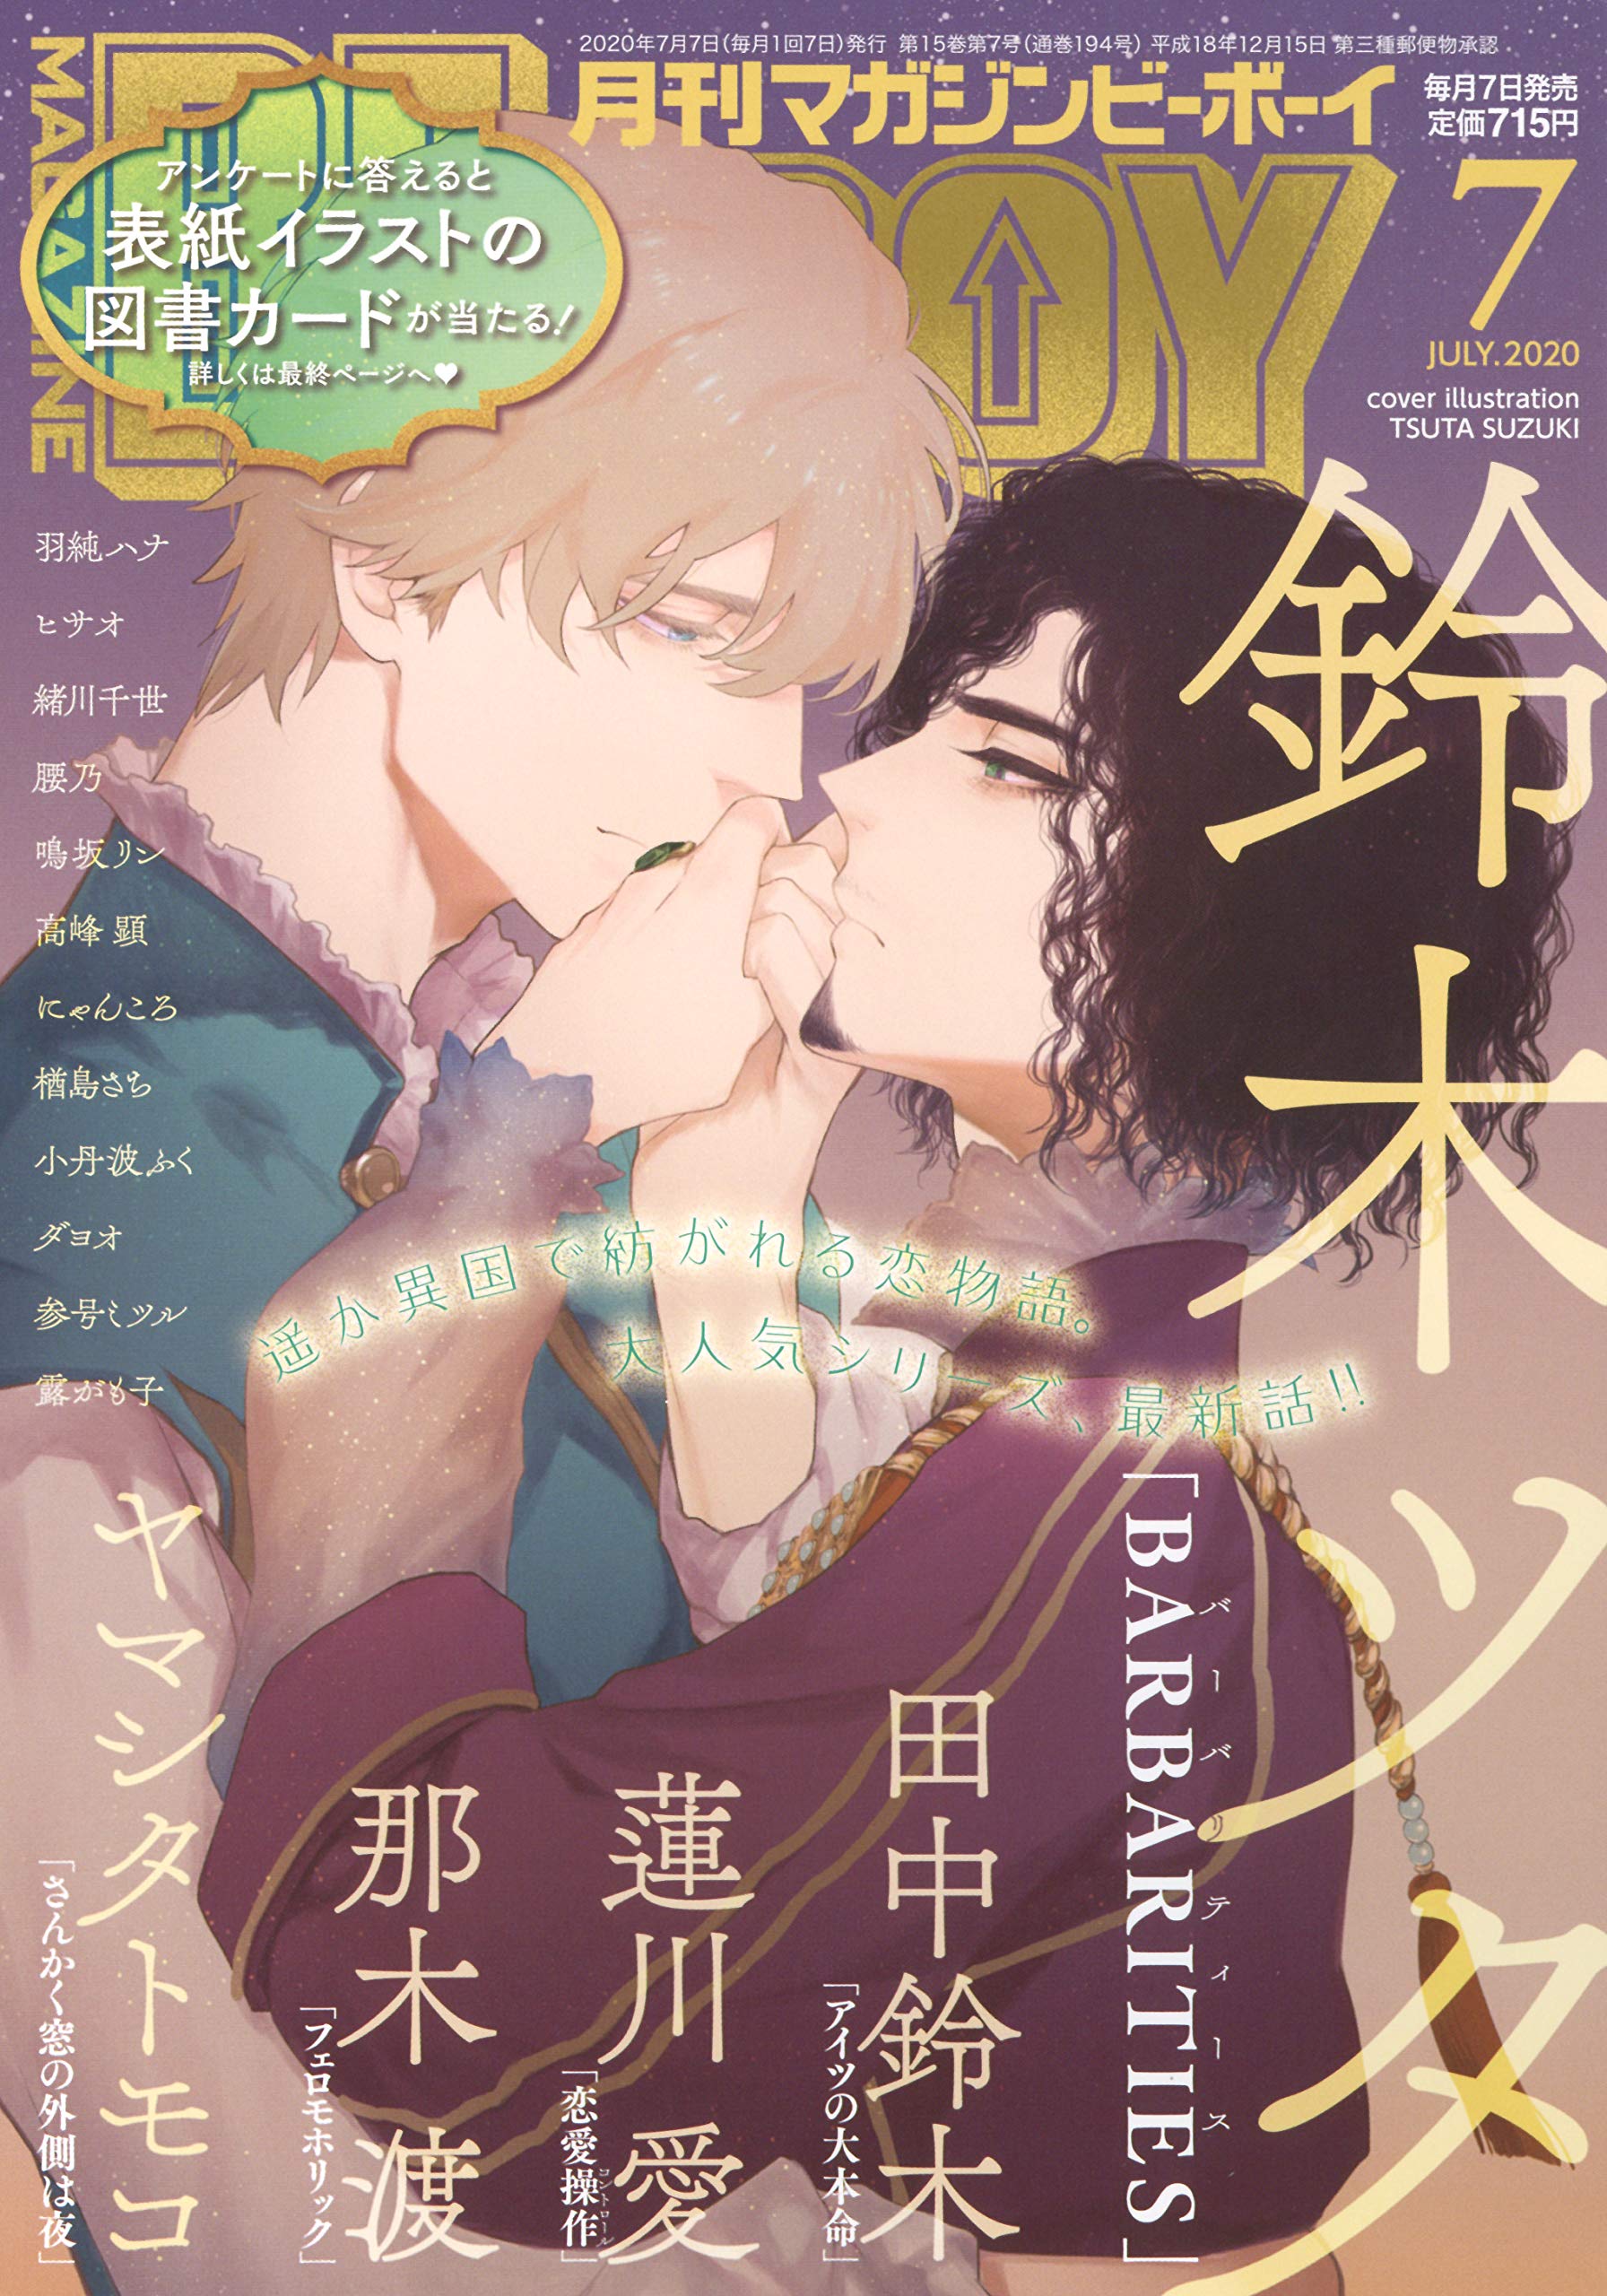 Boys Love (Yaoi) Magazine - MAGAZINE BE×BOY (MAGAZINE BE×BOY (マガジンビーボーイ) 2020年07月号 [雑誌]) / Hasukawa Ai & Takamine Akira & Tanaka Suzuki & Suzuki Tsuta & Yamashita Tomoko